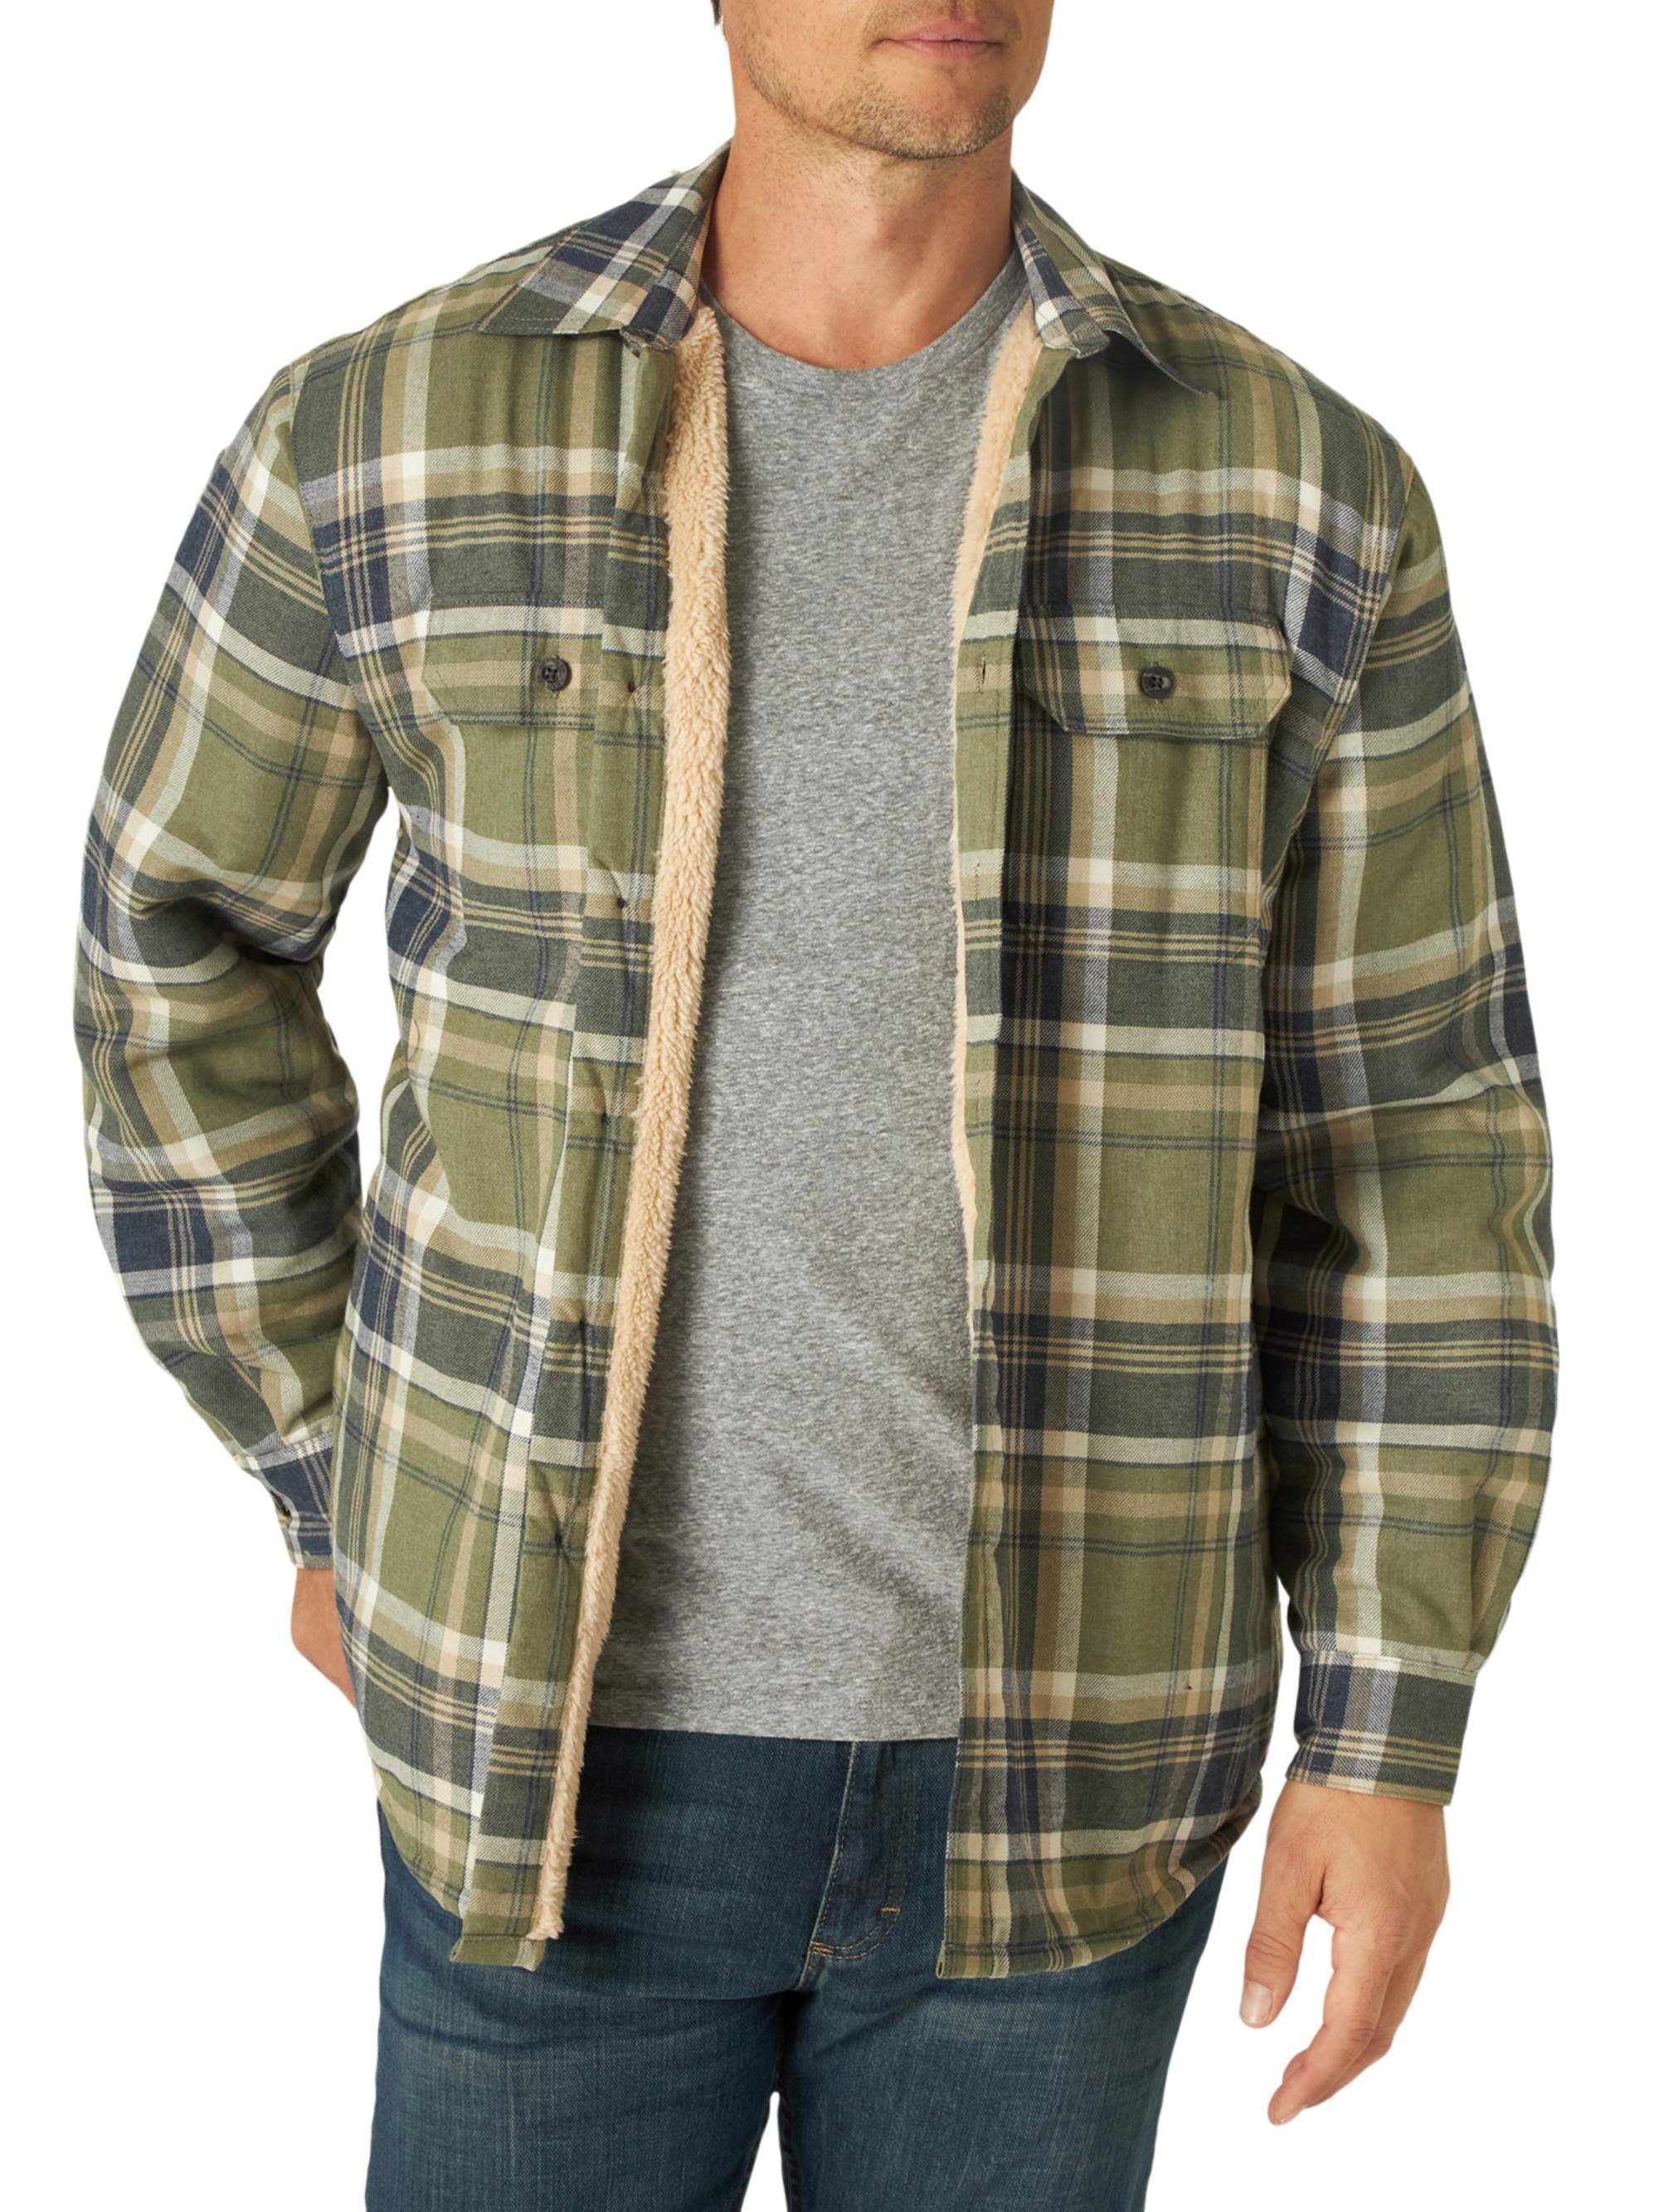 Wrangler Authentics Mens Long Sleeve Sherpa Lined Shirt Jacket 